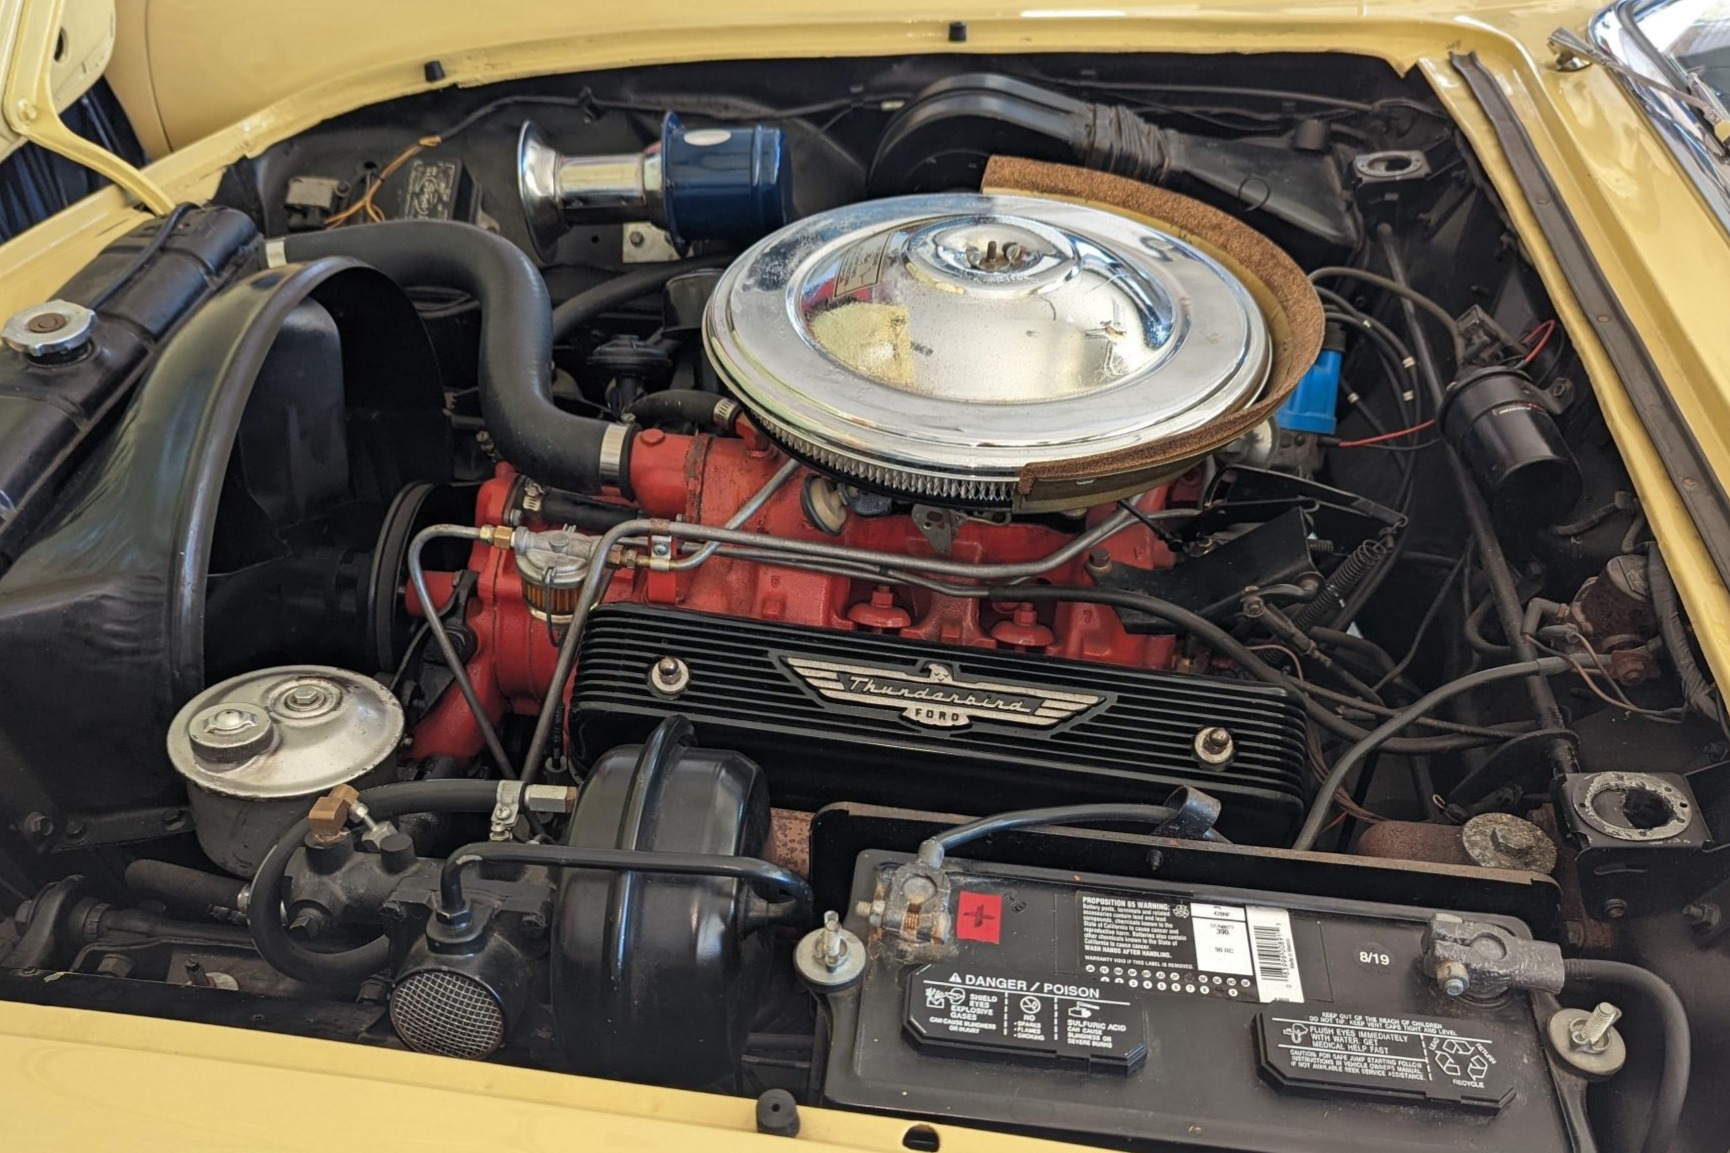 1957 Ford Thunderbird Engine Bay